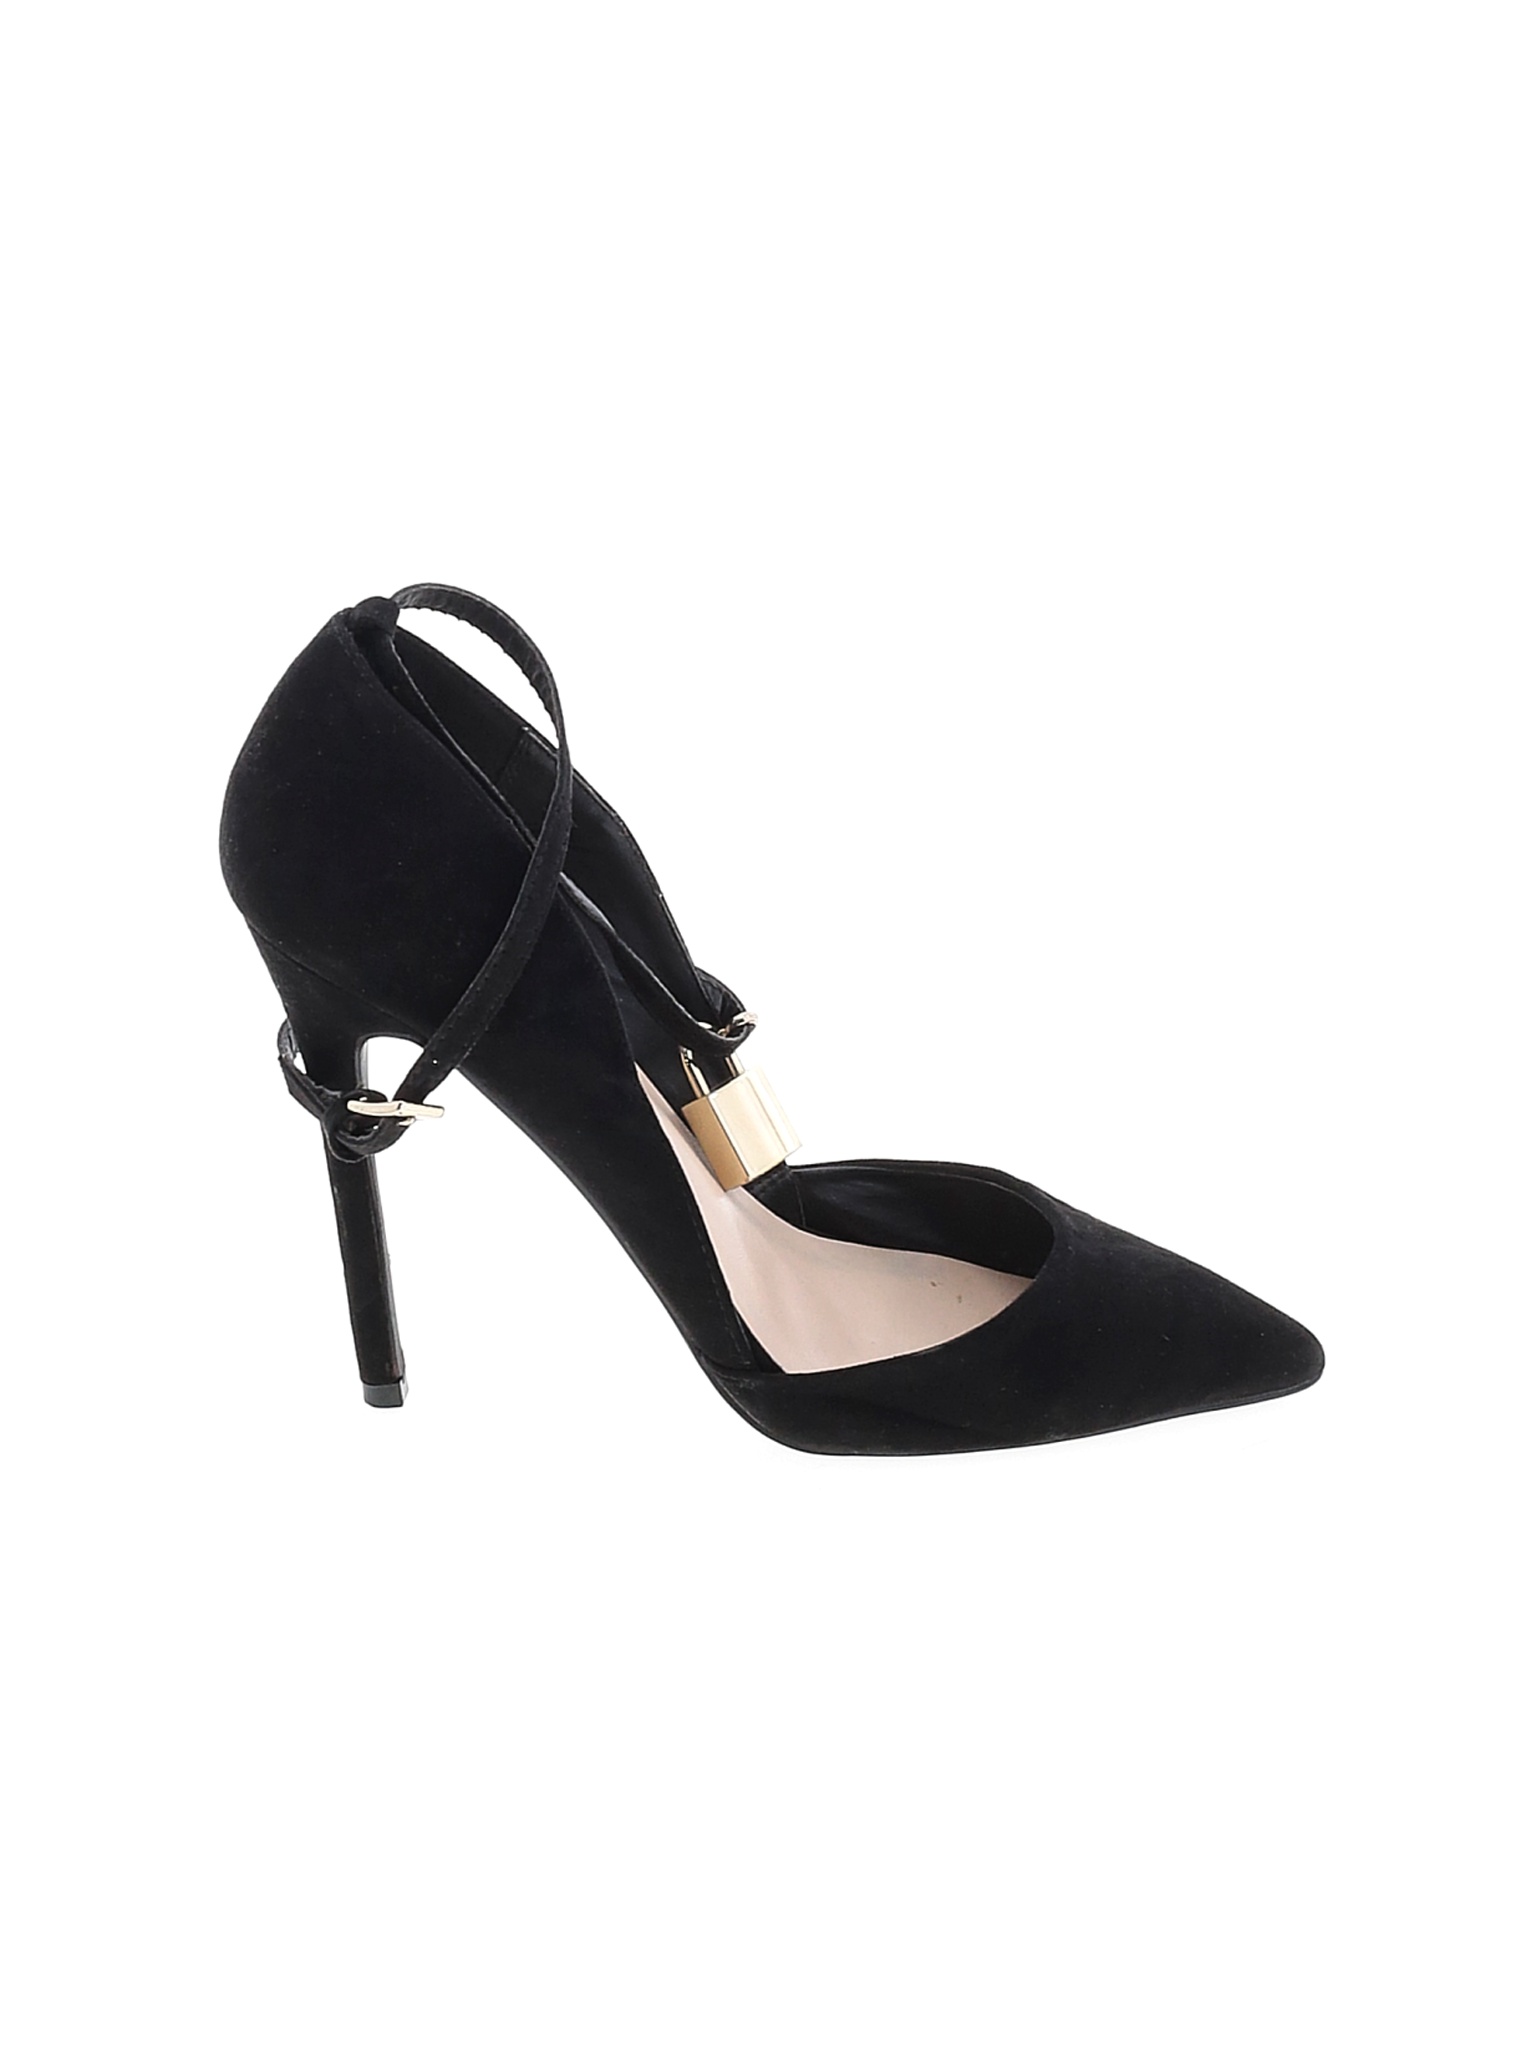 Shoedazzle Women Black Heels US 8.5 | eBay